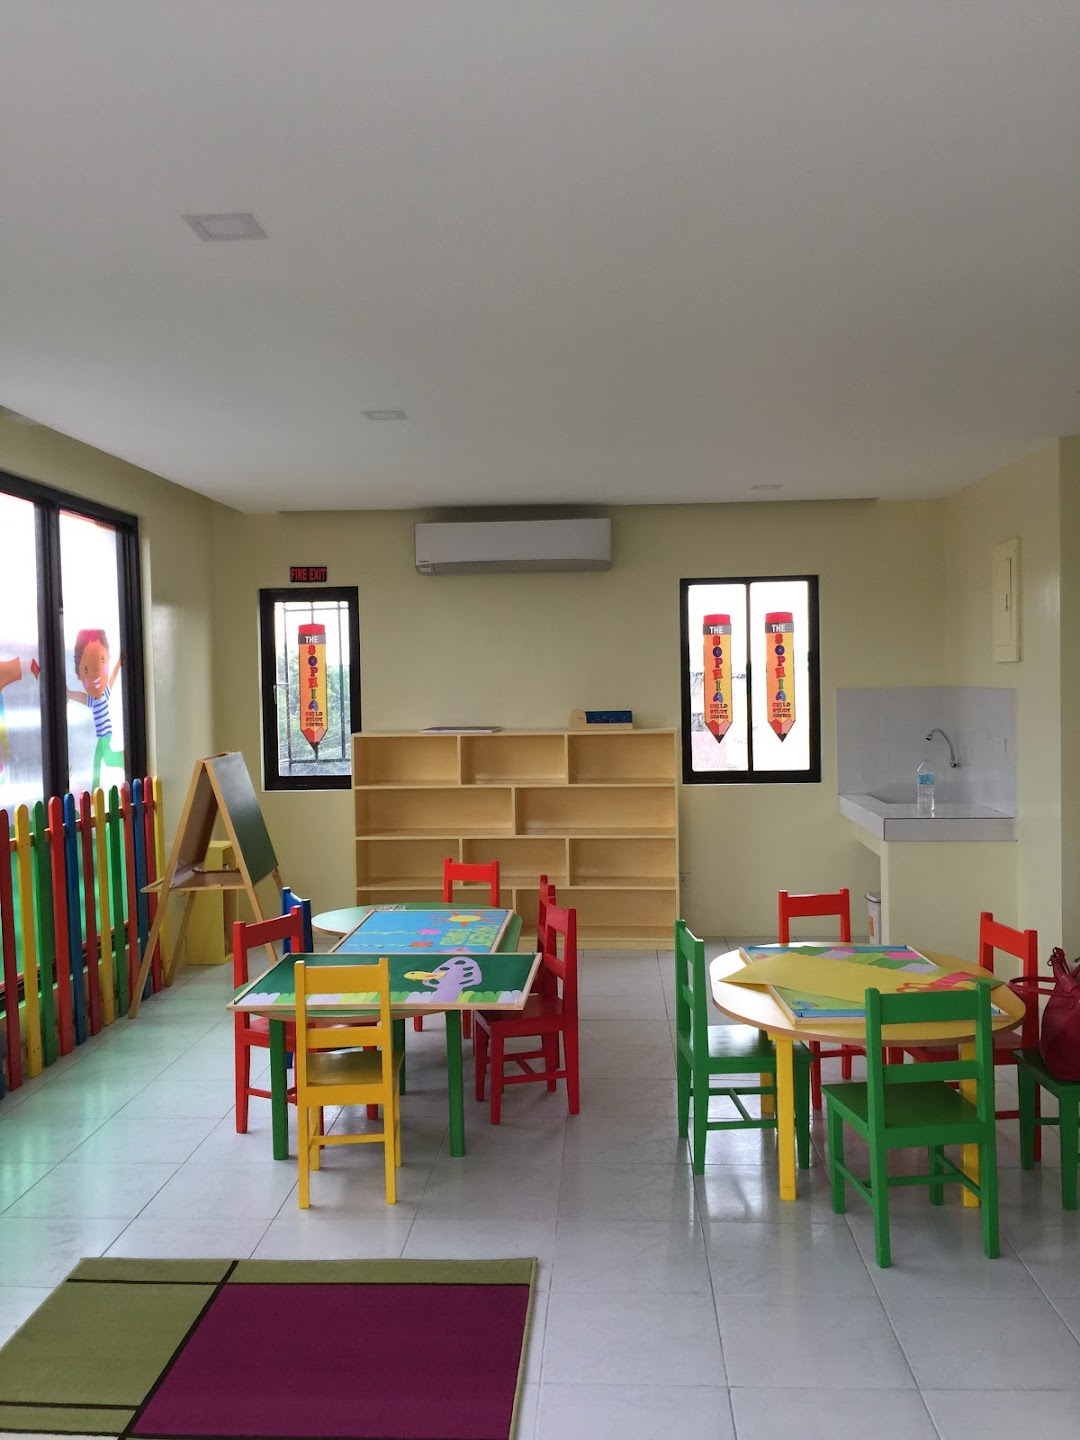 The Sophia Child Study Center